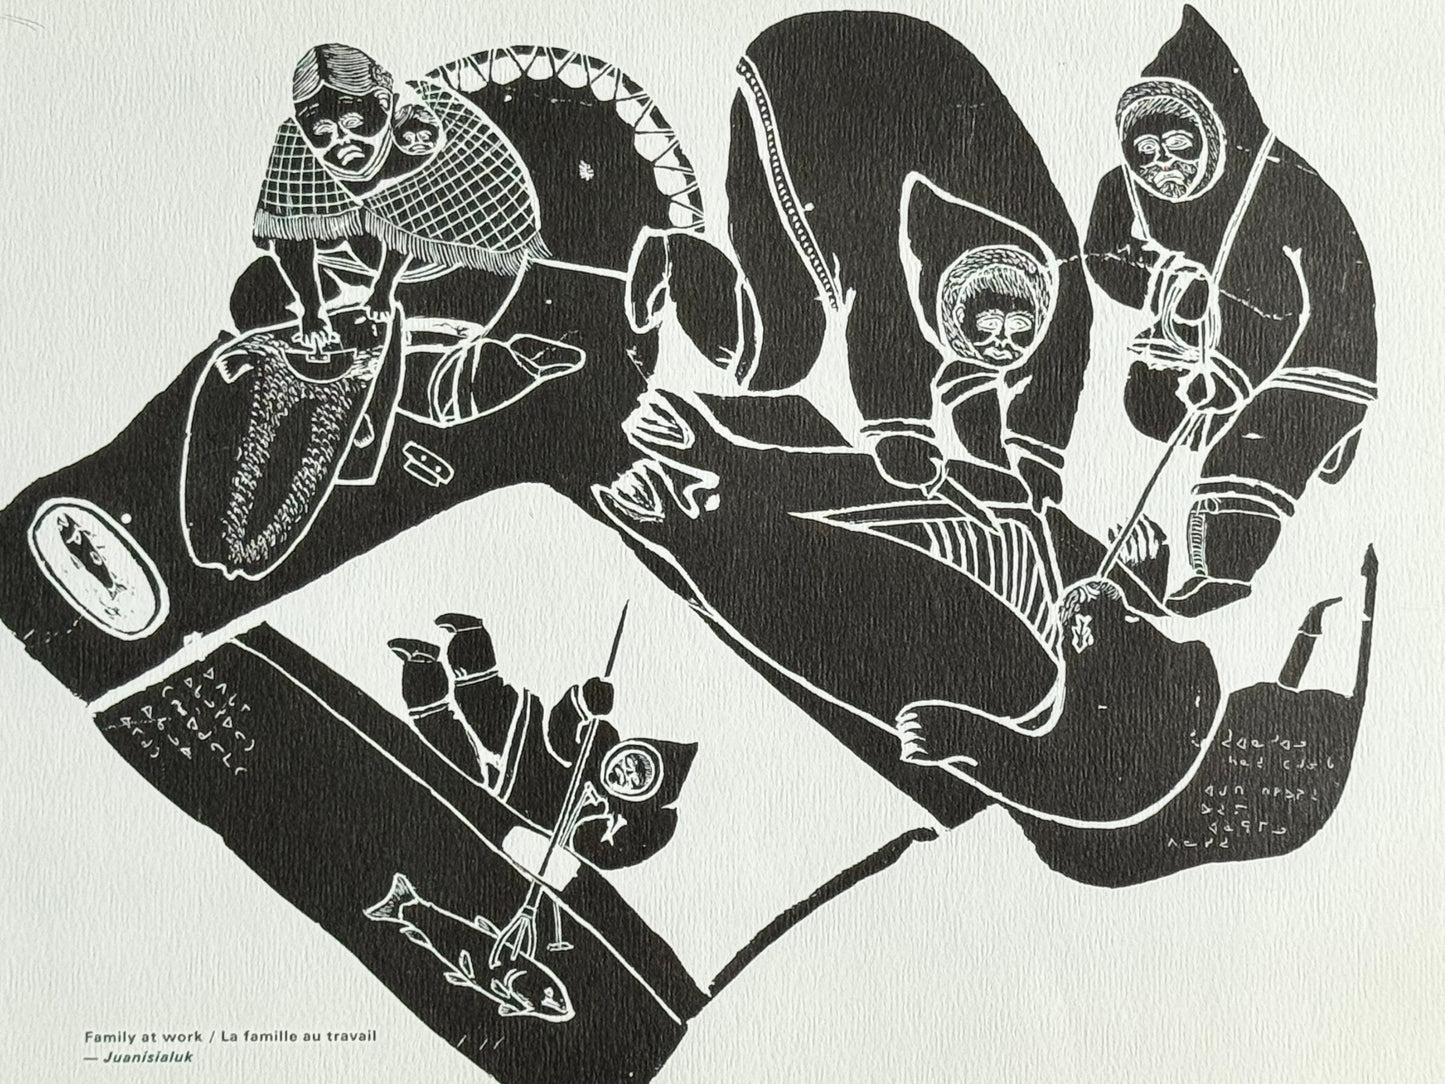 La Famille au travail / Family at work - Juanisialu Irqumia - Collection Inuit